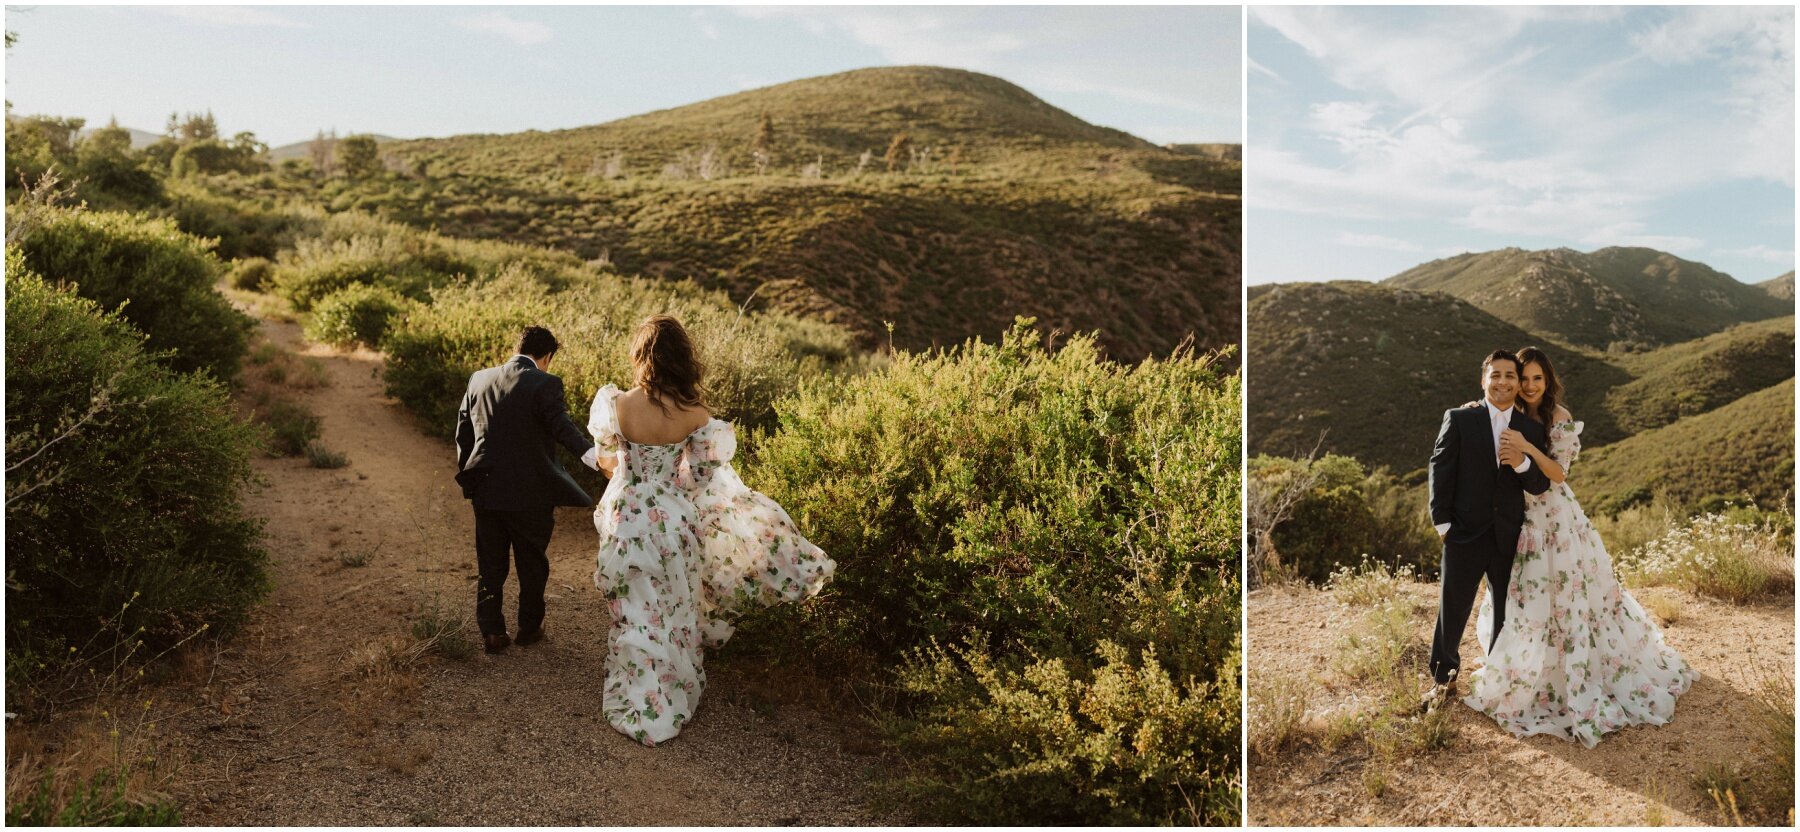 desert engagement session in california - erika greene photography - couples photographer_0011.jpg